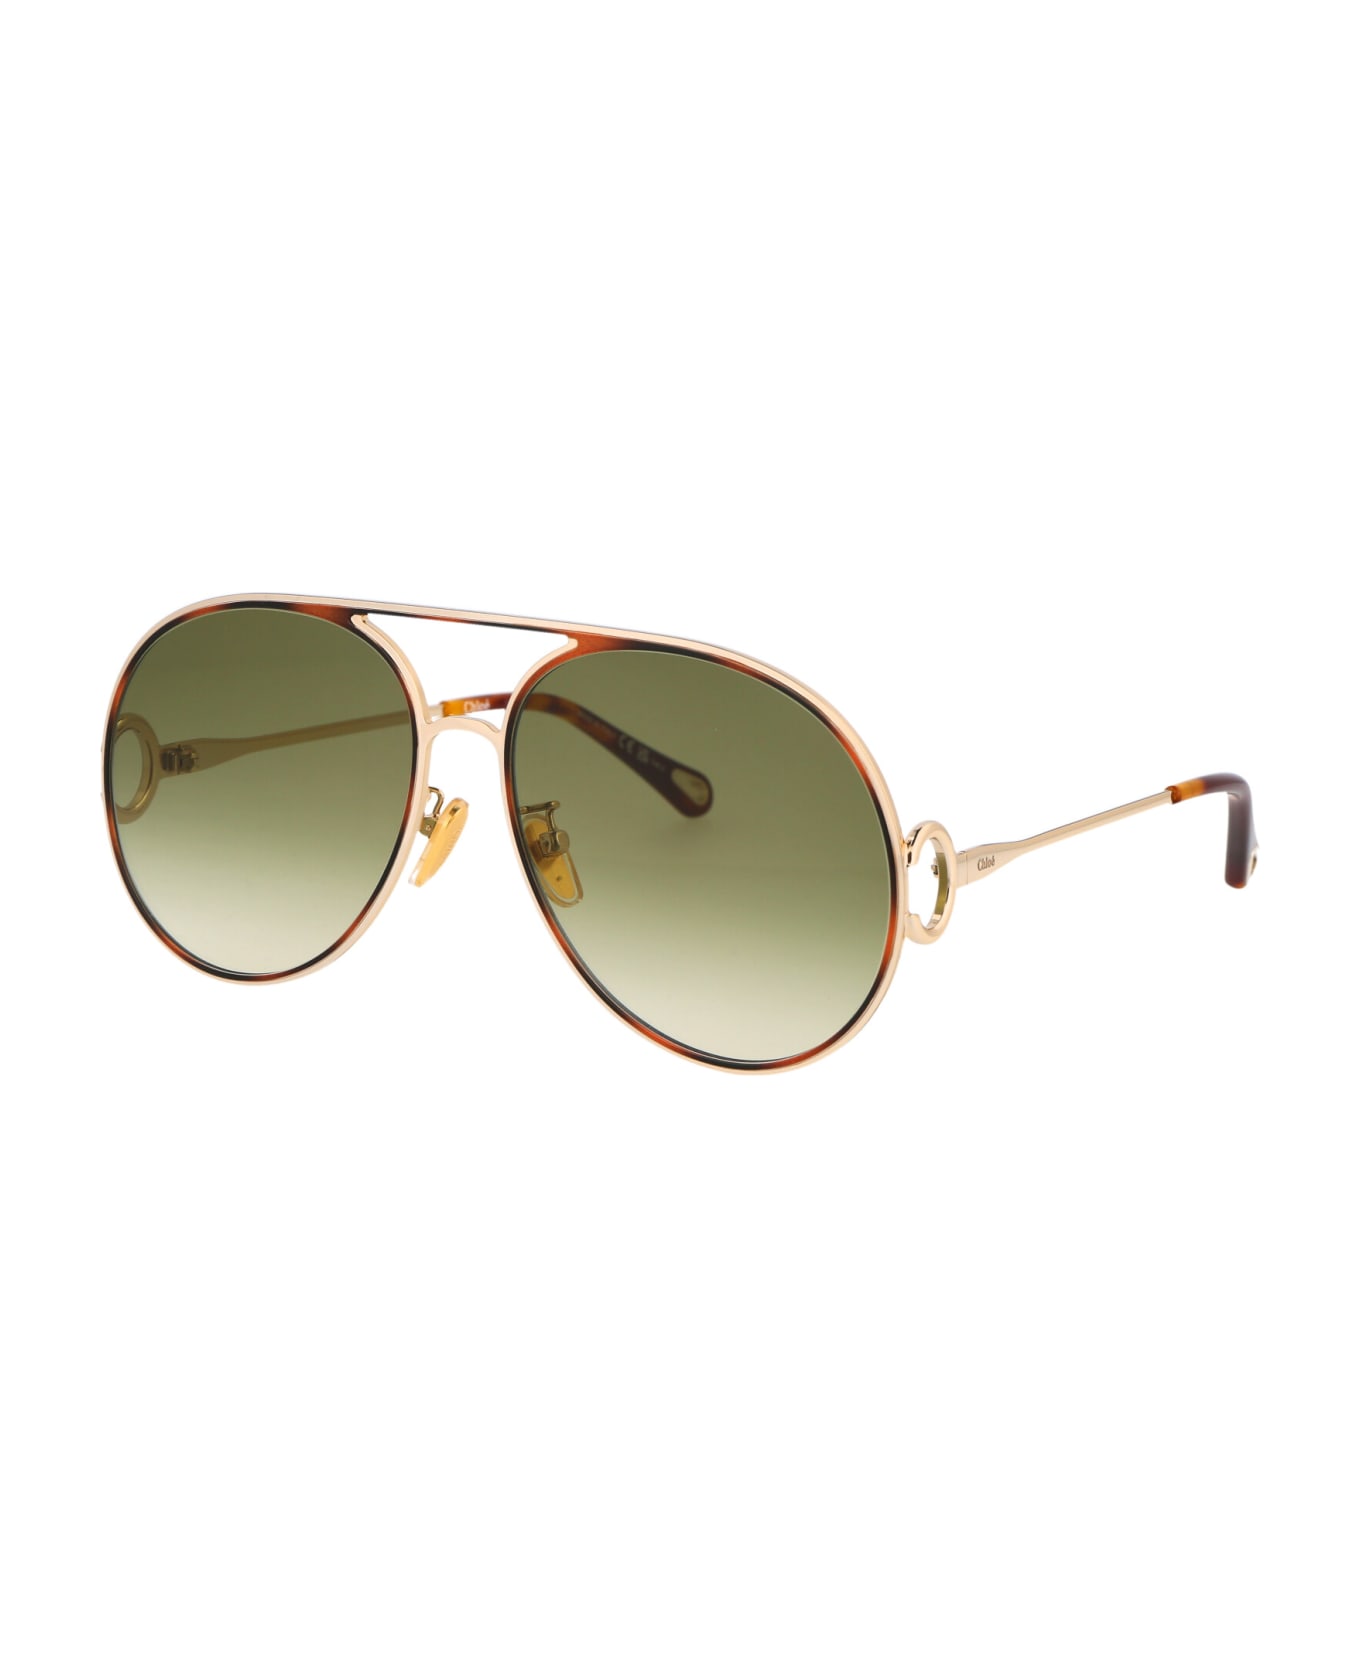 Chloé Eyewear Ch0145s Sunglasses - 002 GOLD GOLD GREEN サングラス